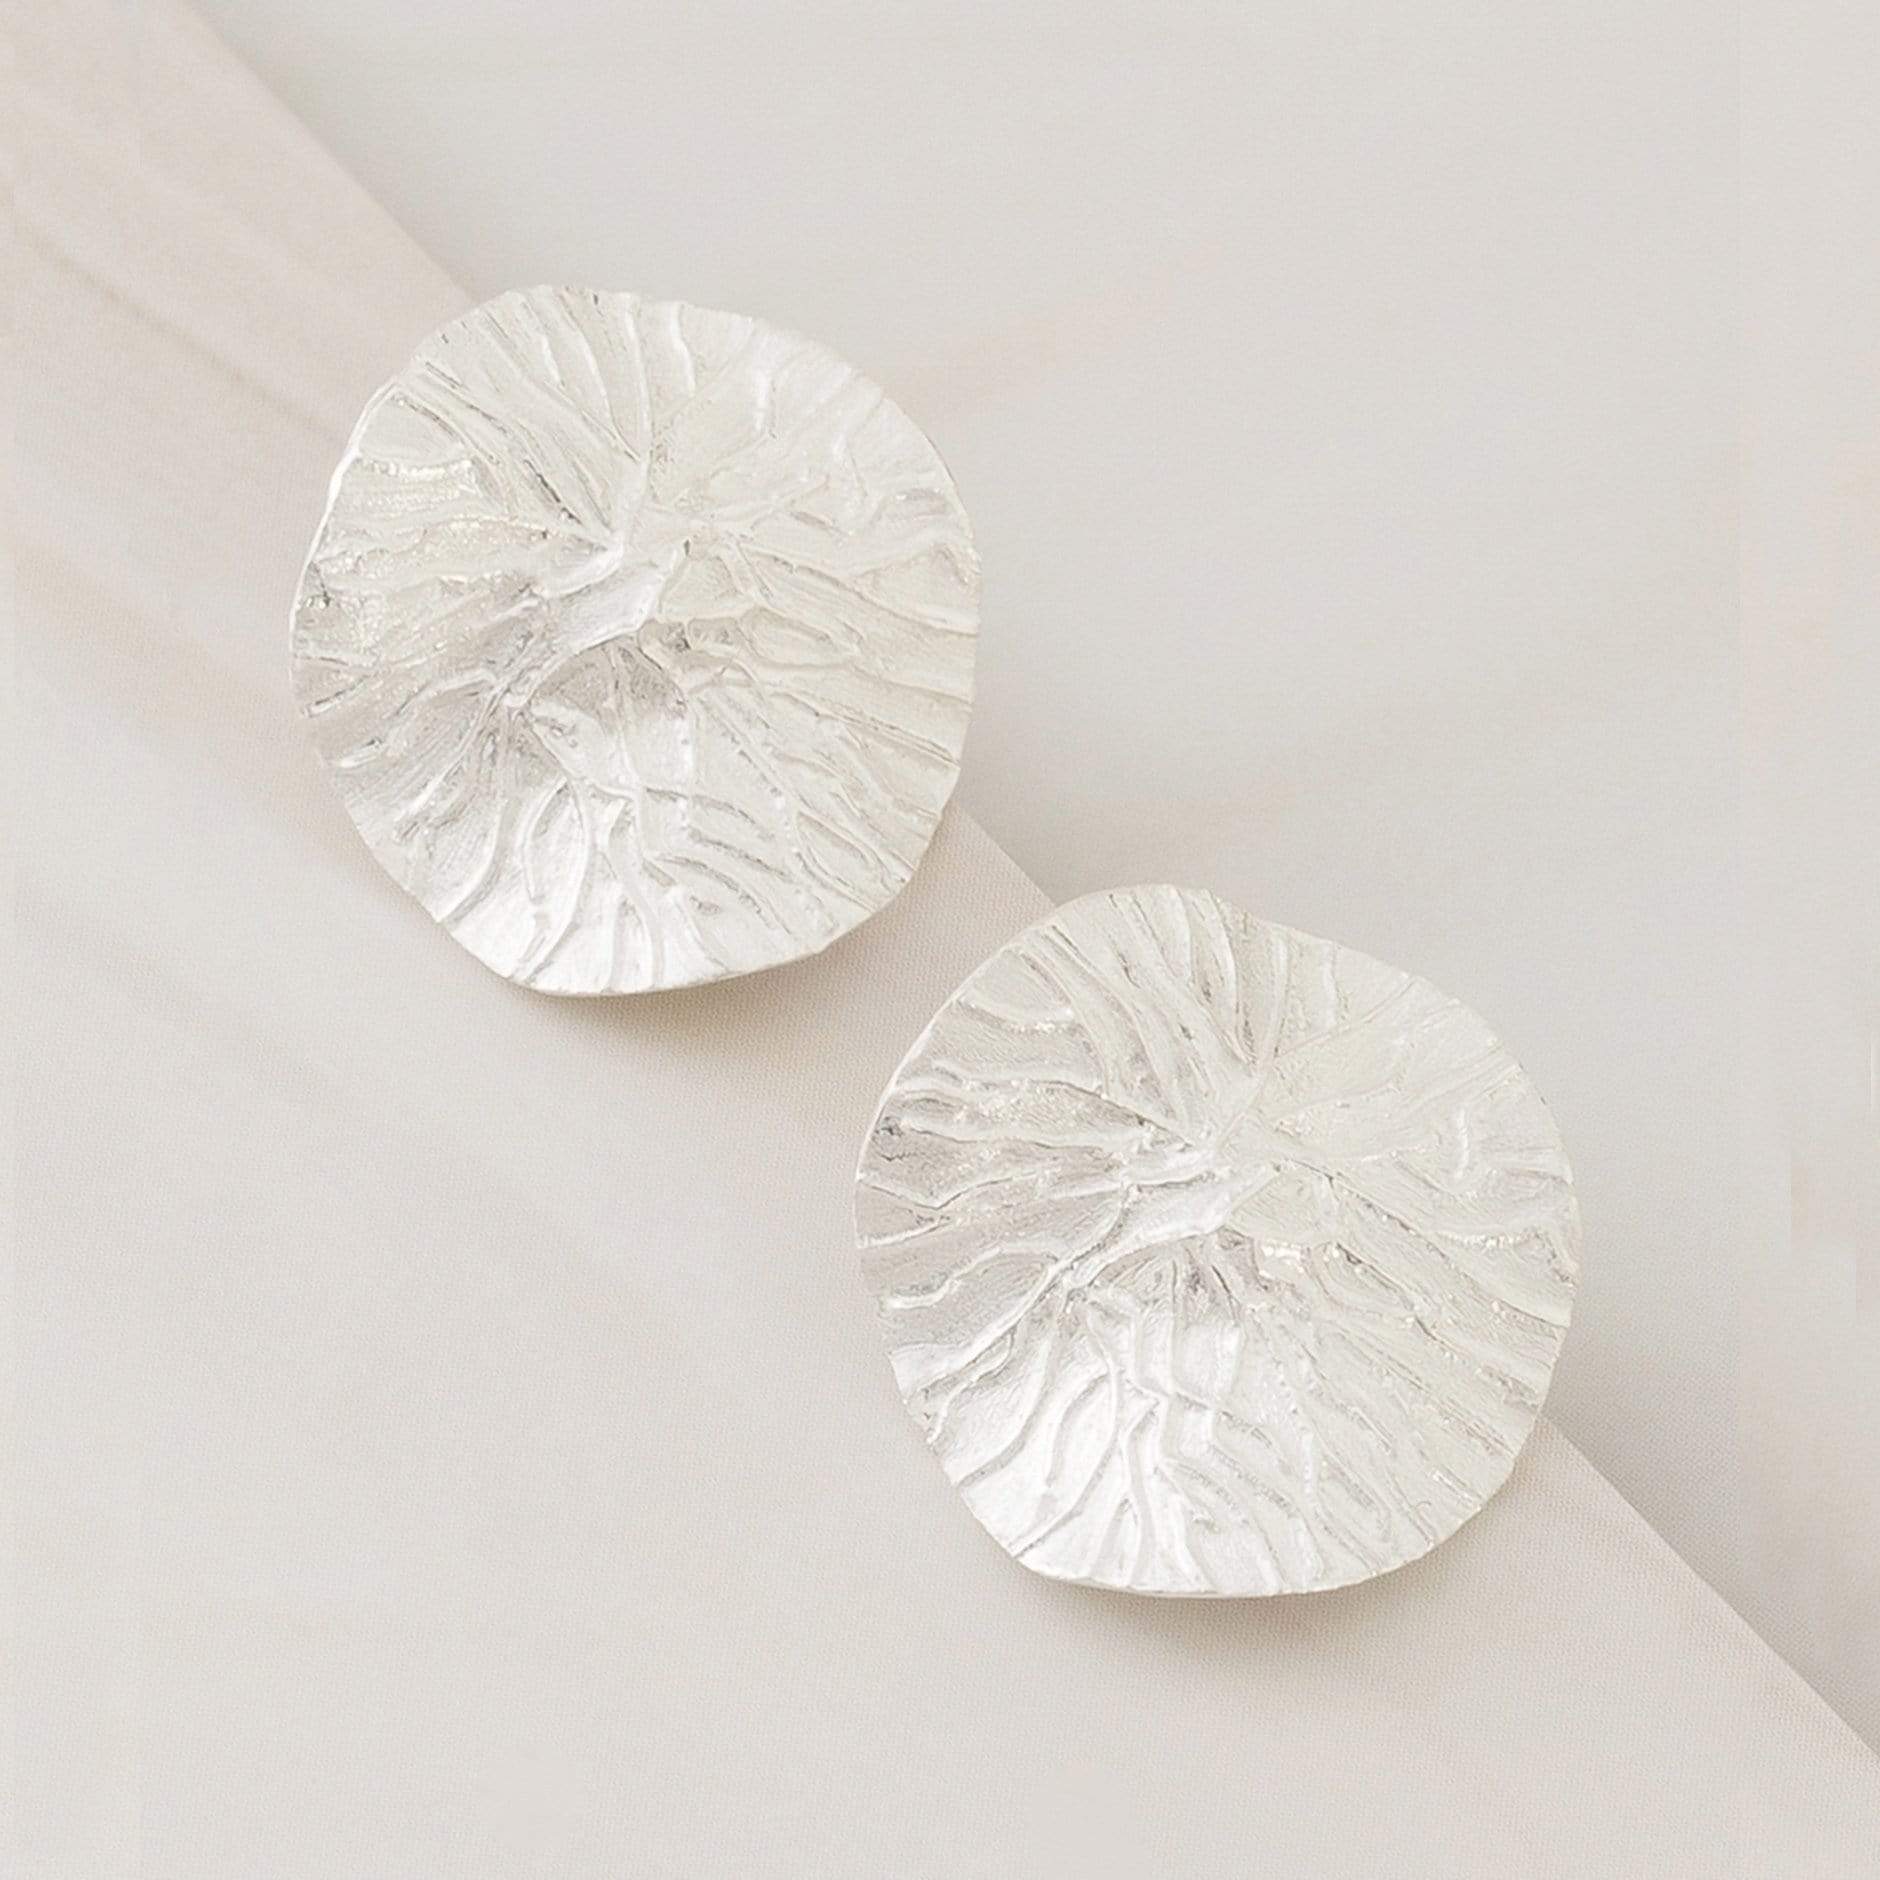 Emblem Jewelry Earrings Silver Tone Petite Lily Pad Disc Statement Earrings